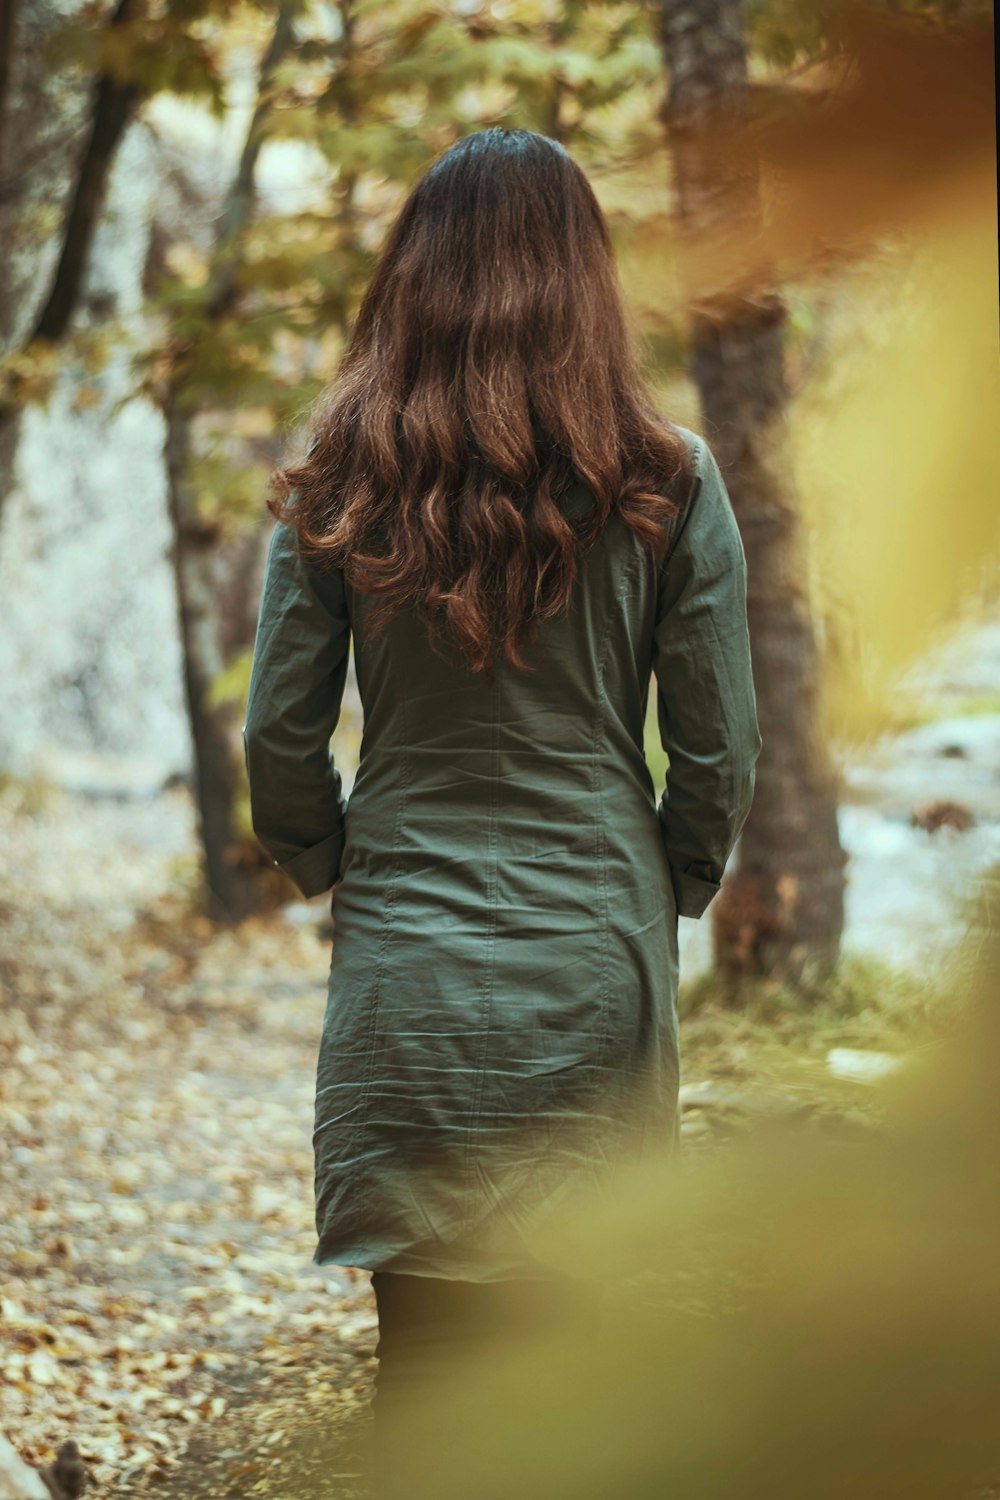 a woman in a green dress walking through a forest